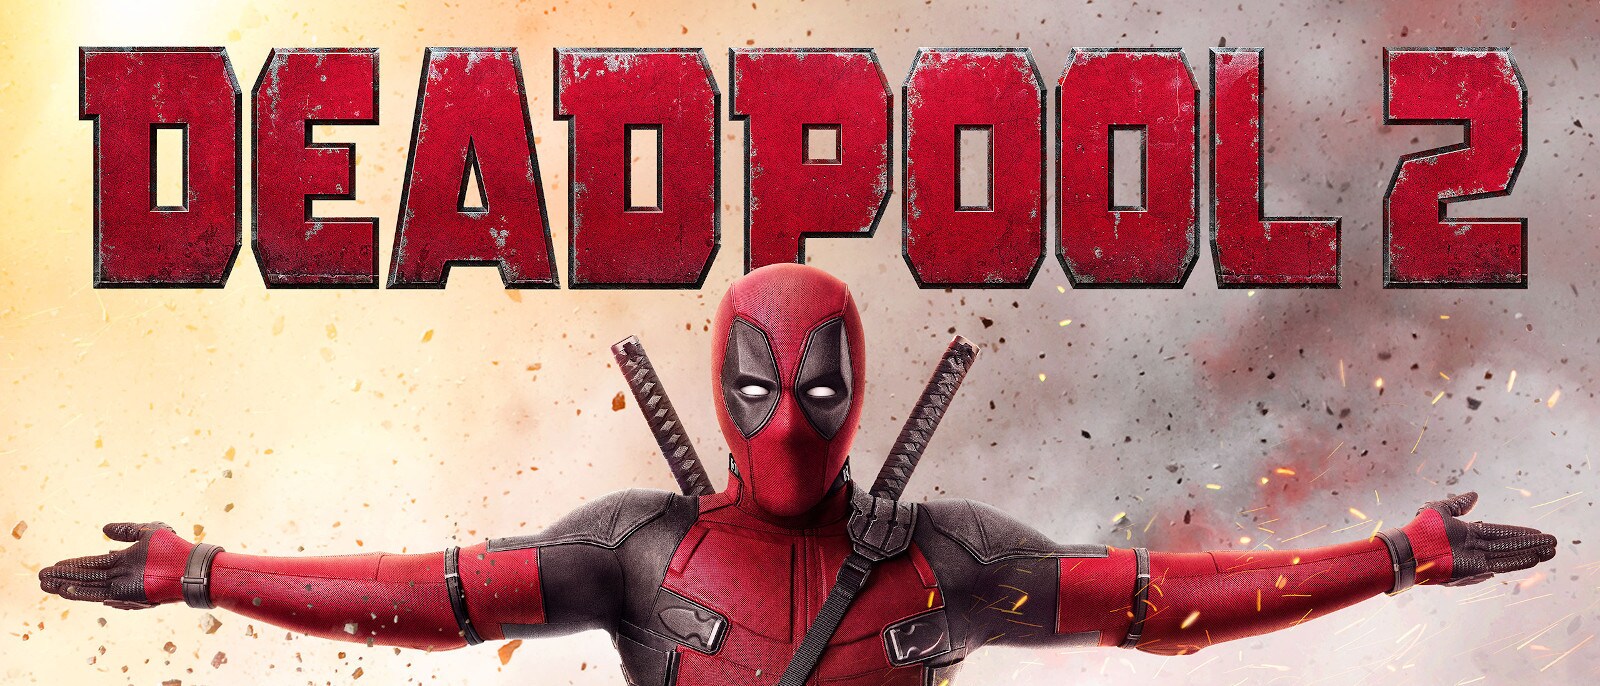 deadpool 2 download full movie free